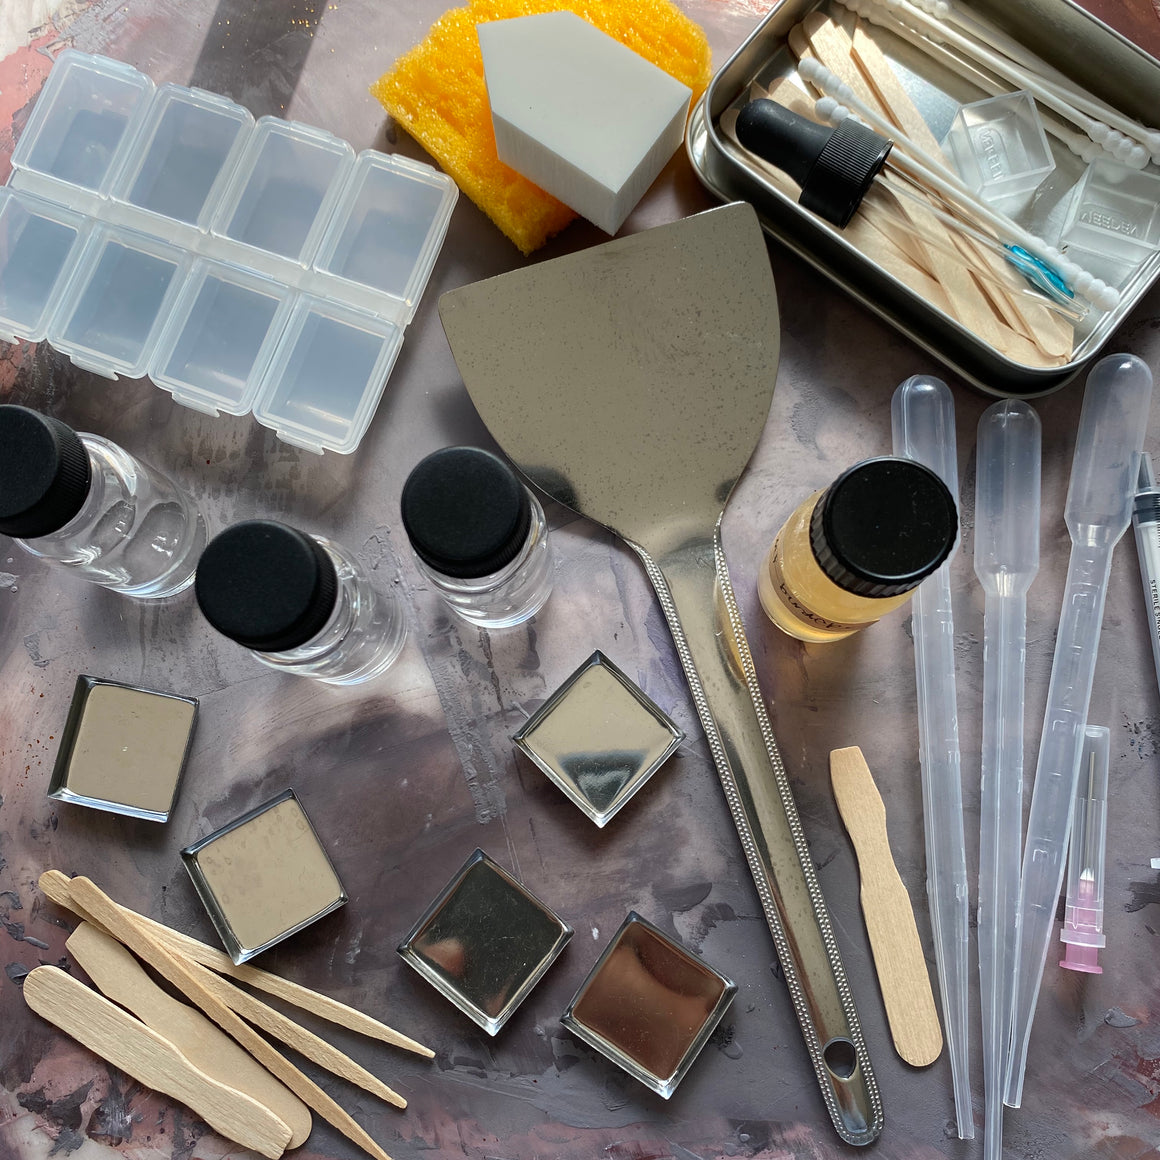 PIGMENT TO PAINT #tracibautistaCOLOR pigment sampler + paint making kit